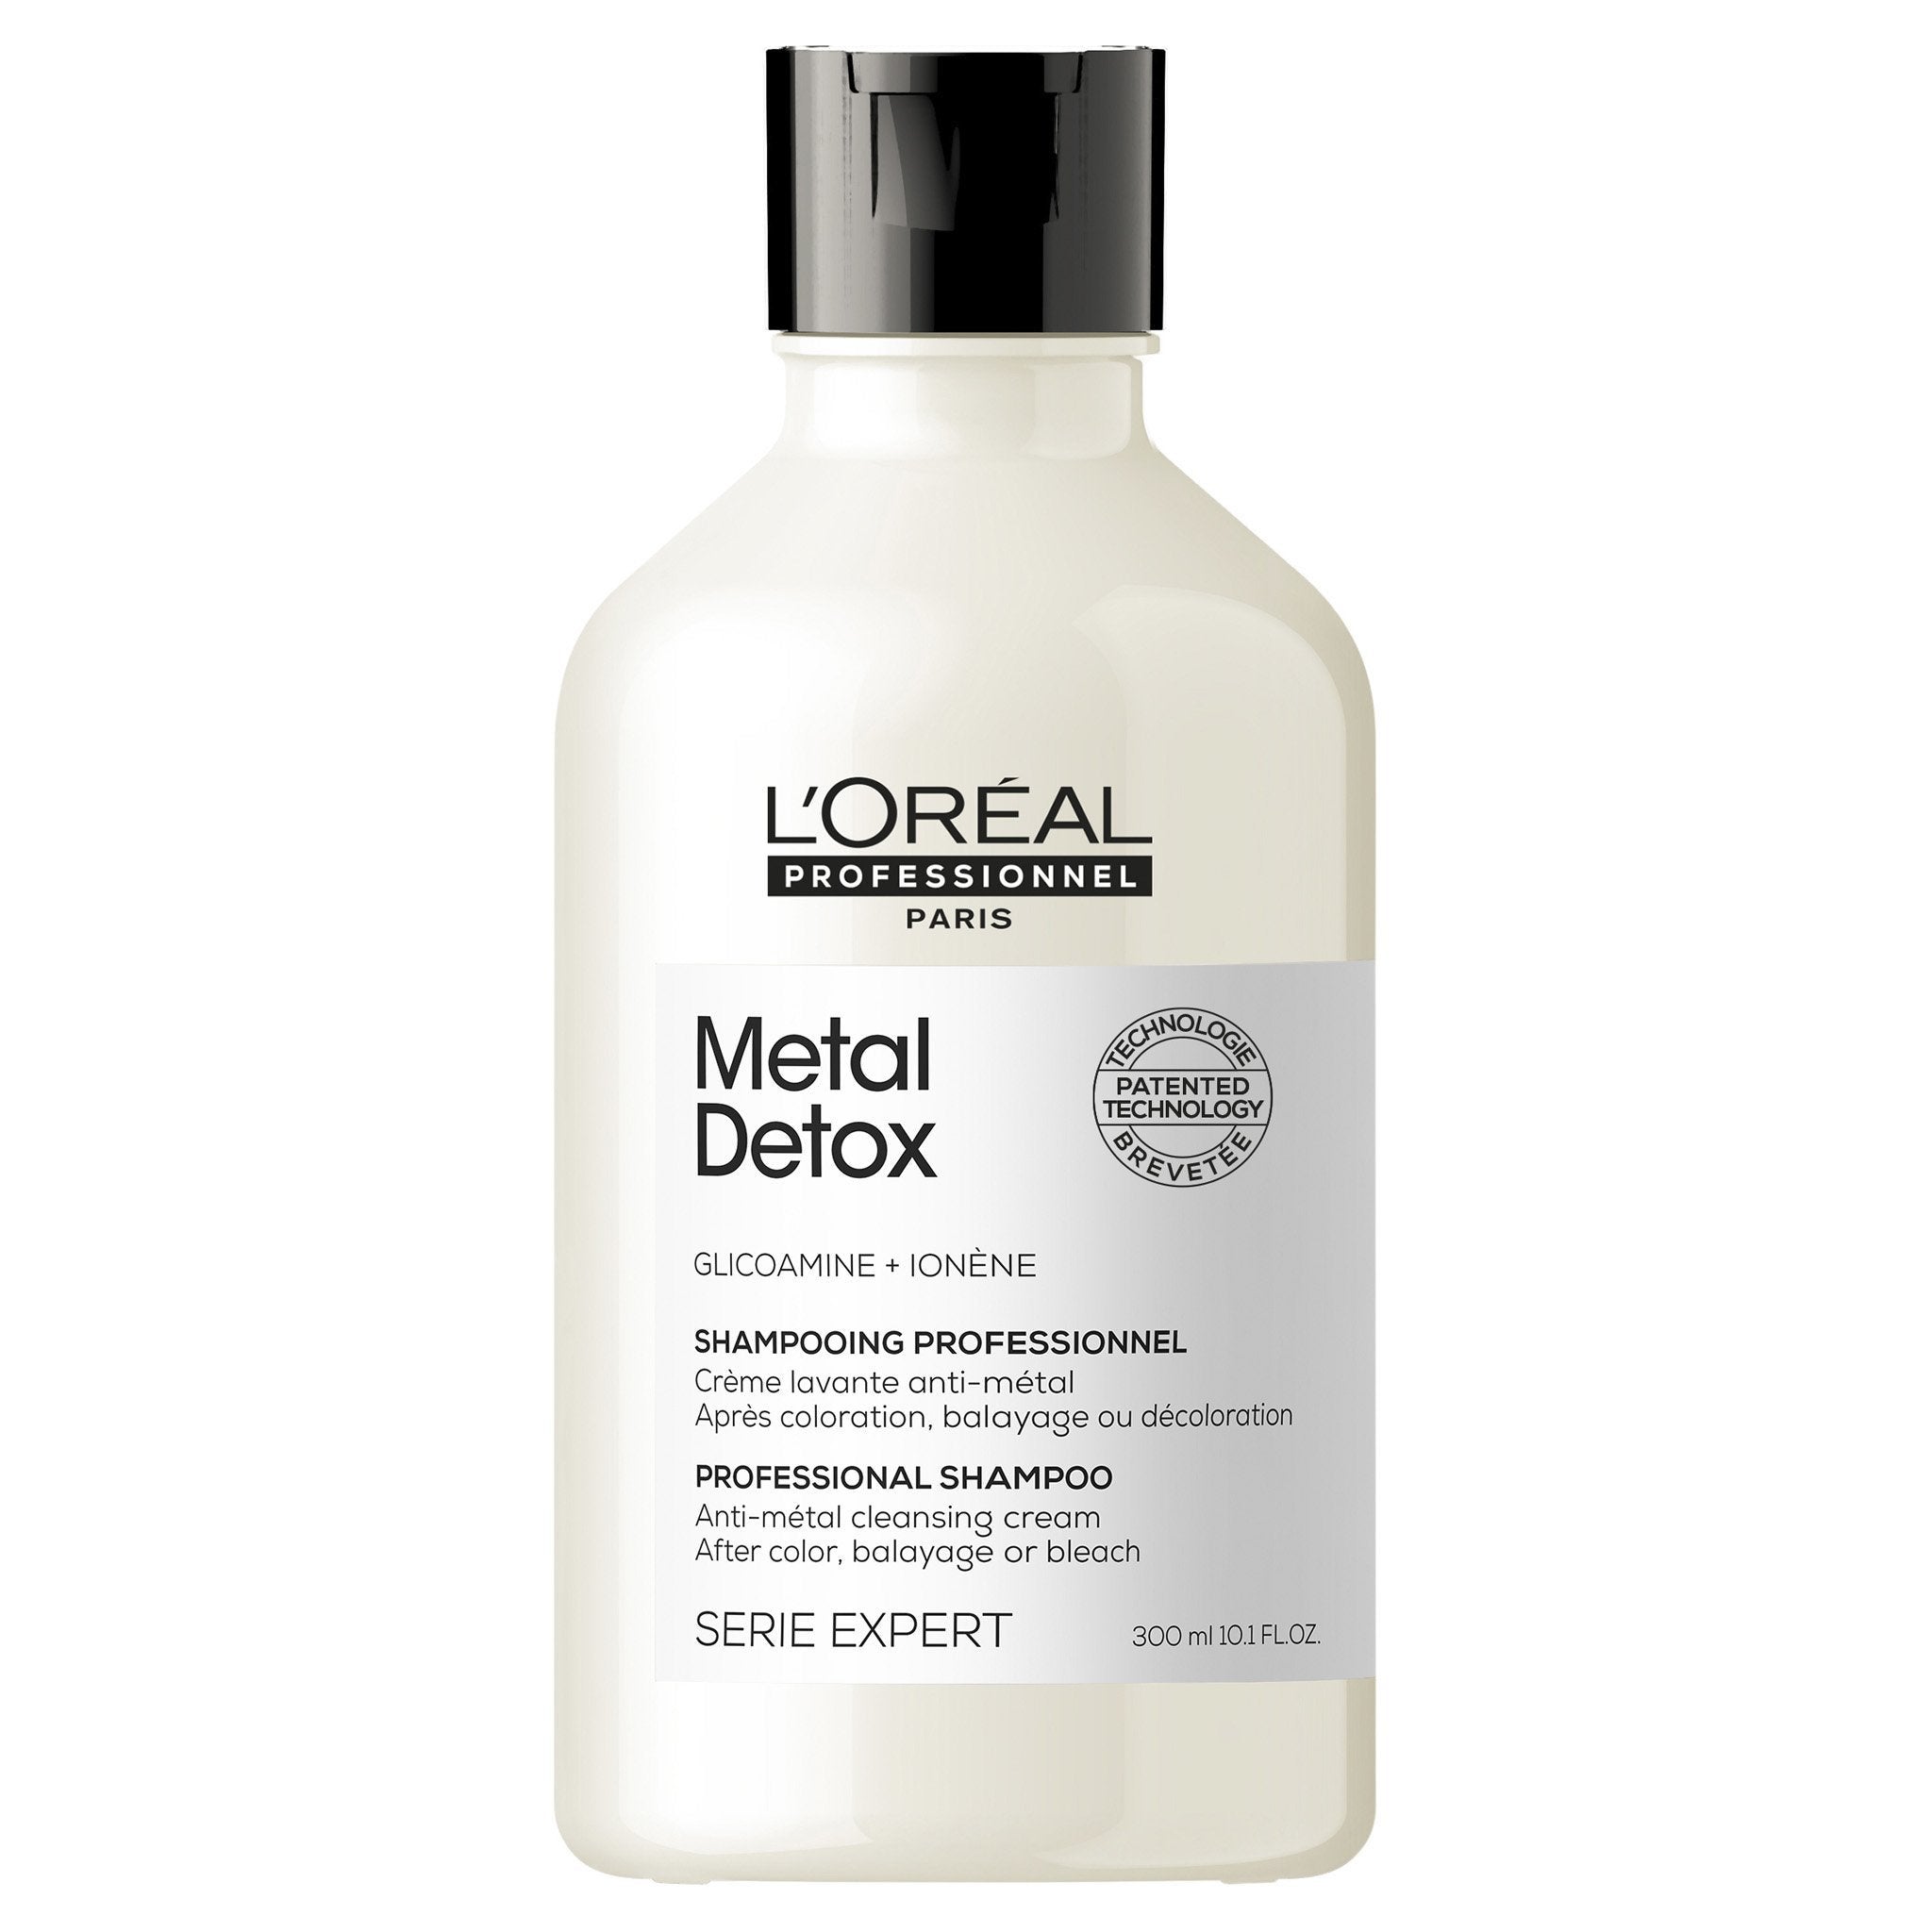 L'Oreal Professionnel Metal Detox Shampoo (300ml)